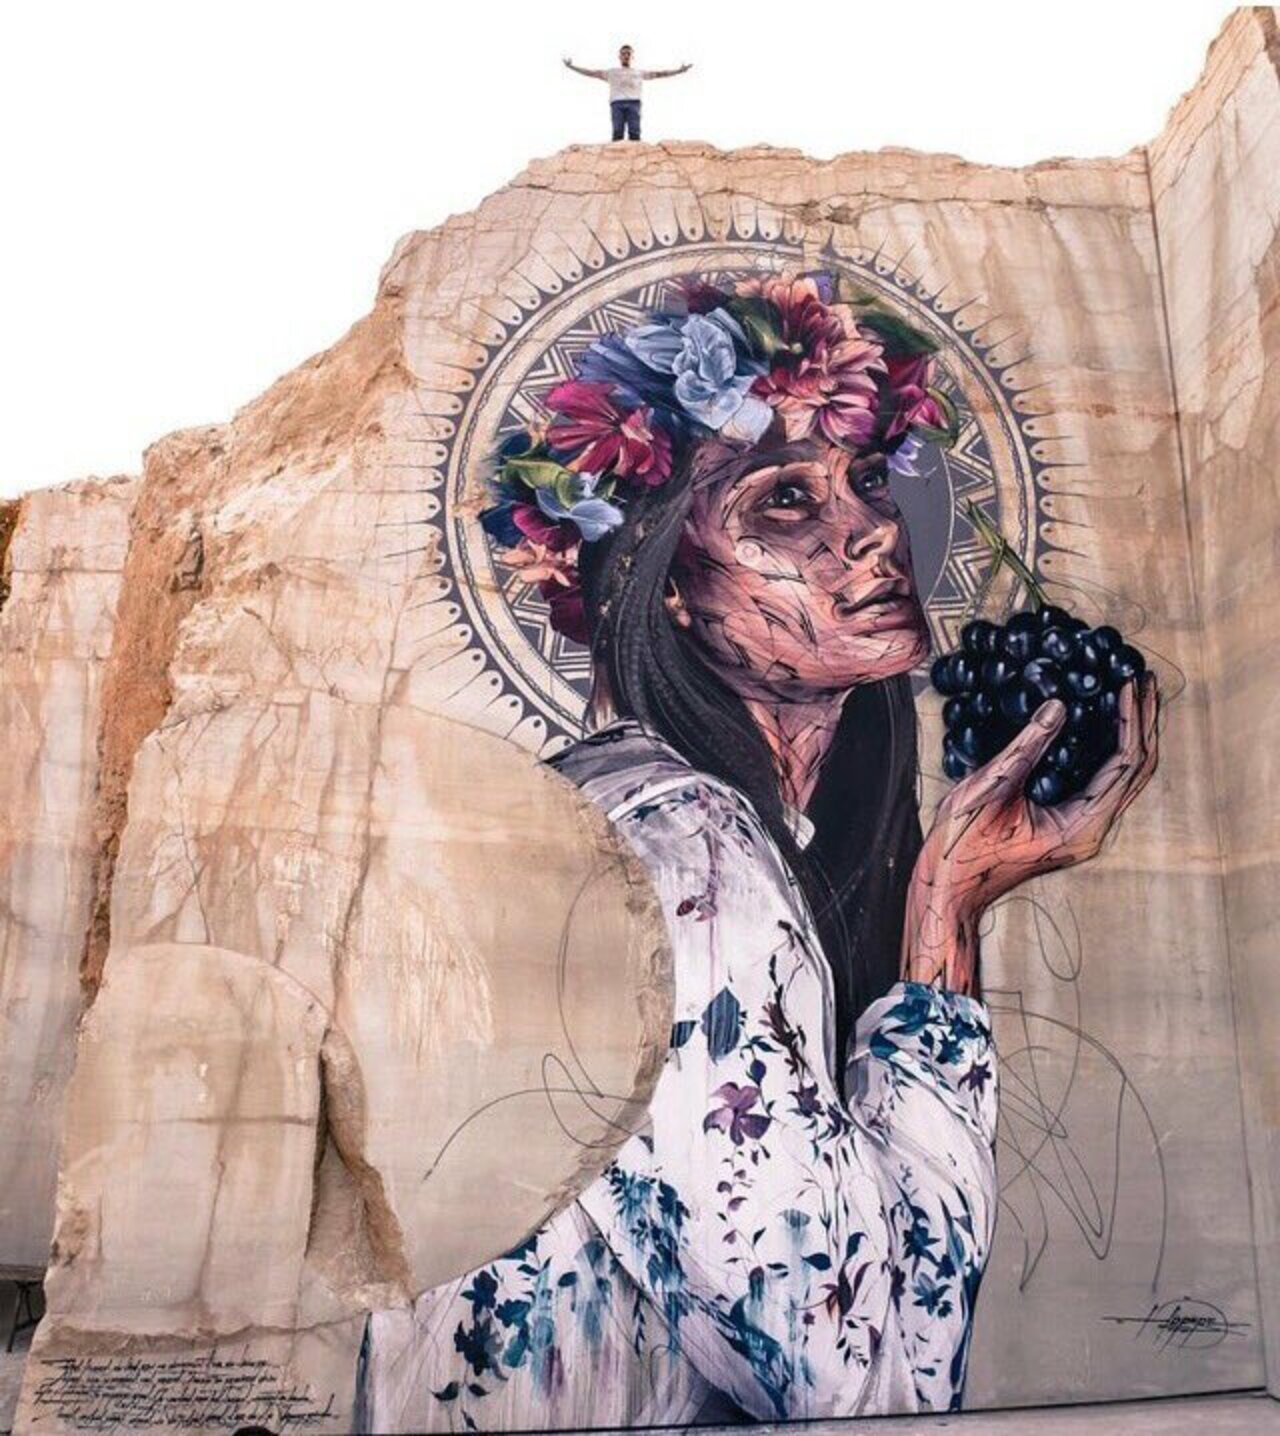 Mural by Hopare#streetart #mural #graffiti #art https://t.co/sECAXHo3ay